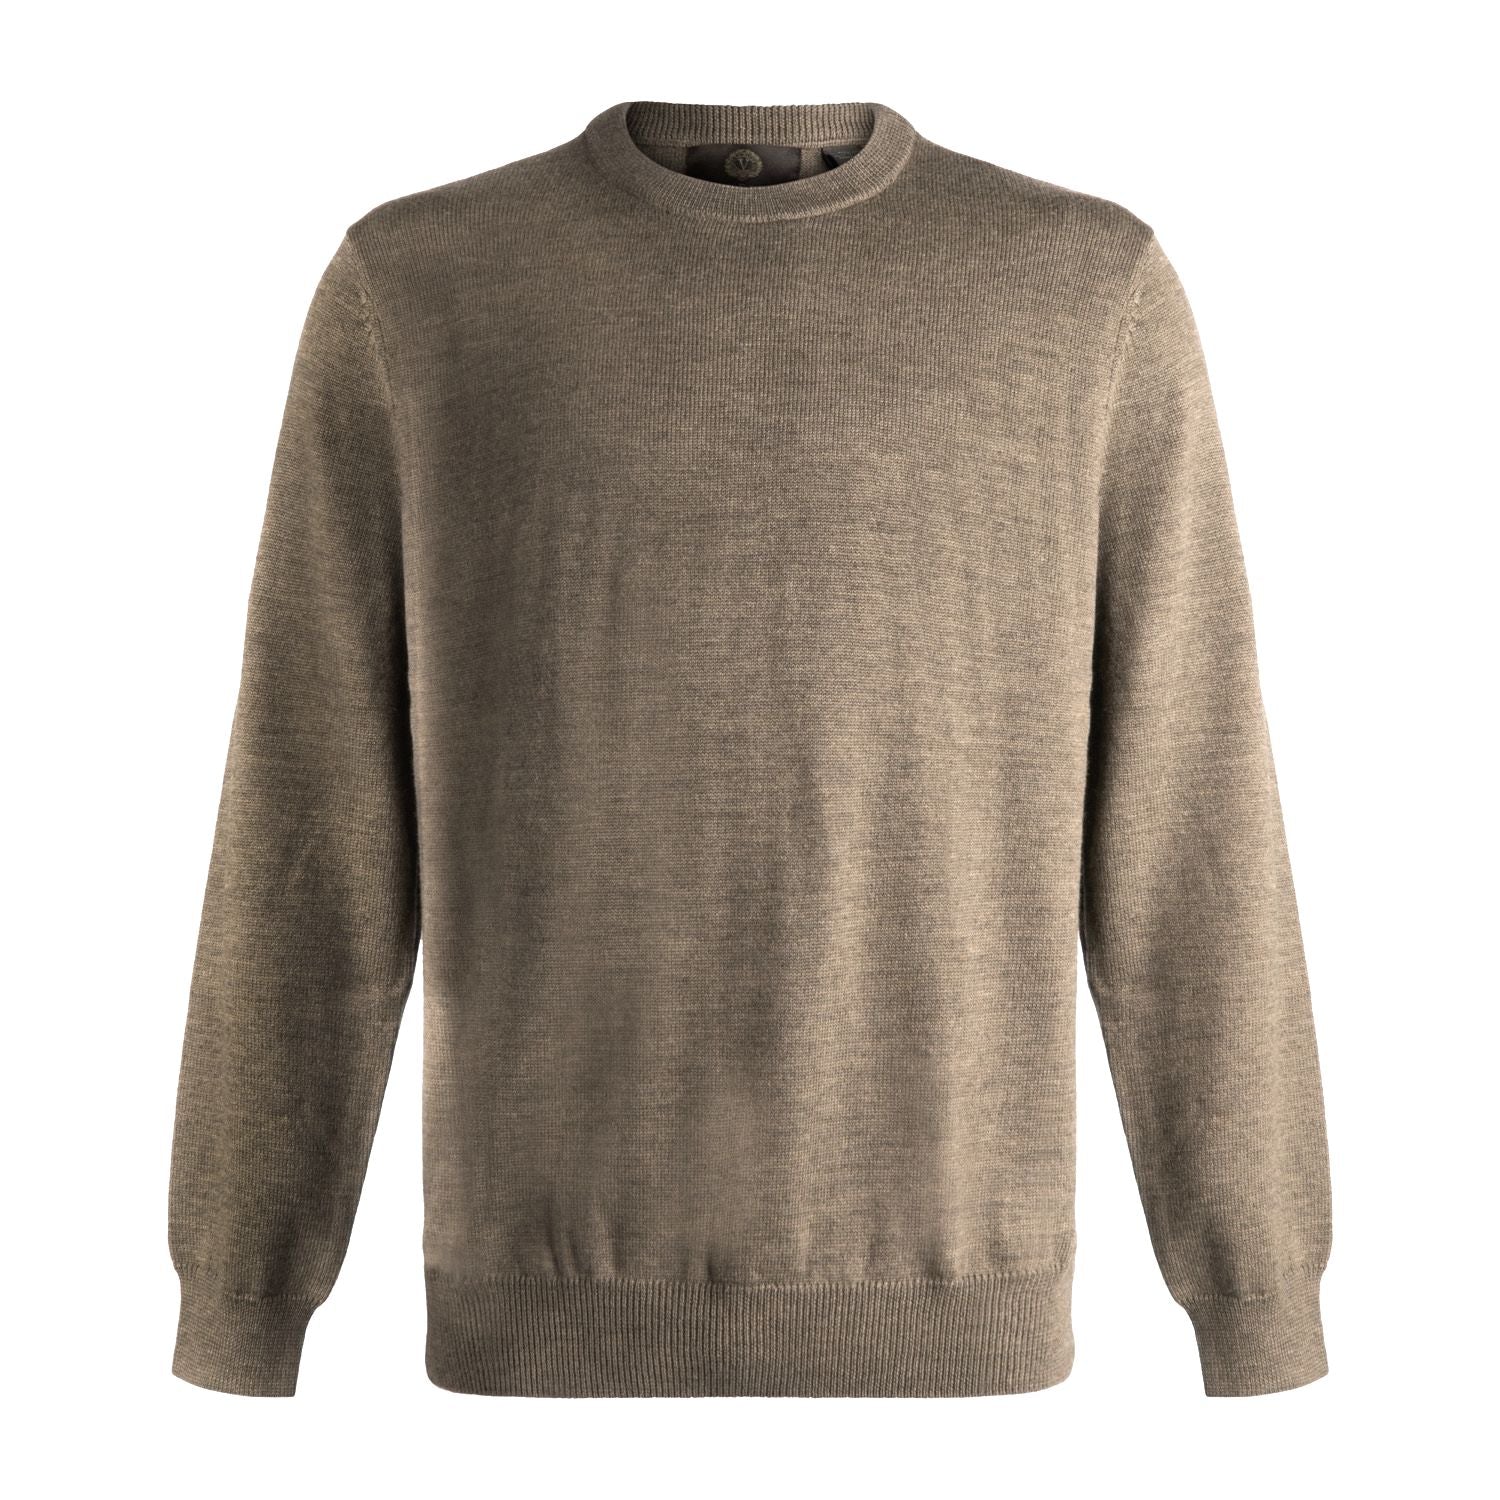 Extra Fine 'Zegna Baruffa' Merino Wool Crew Neck Sweater in Mushroom by Viyella